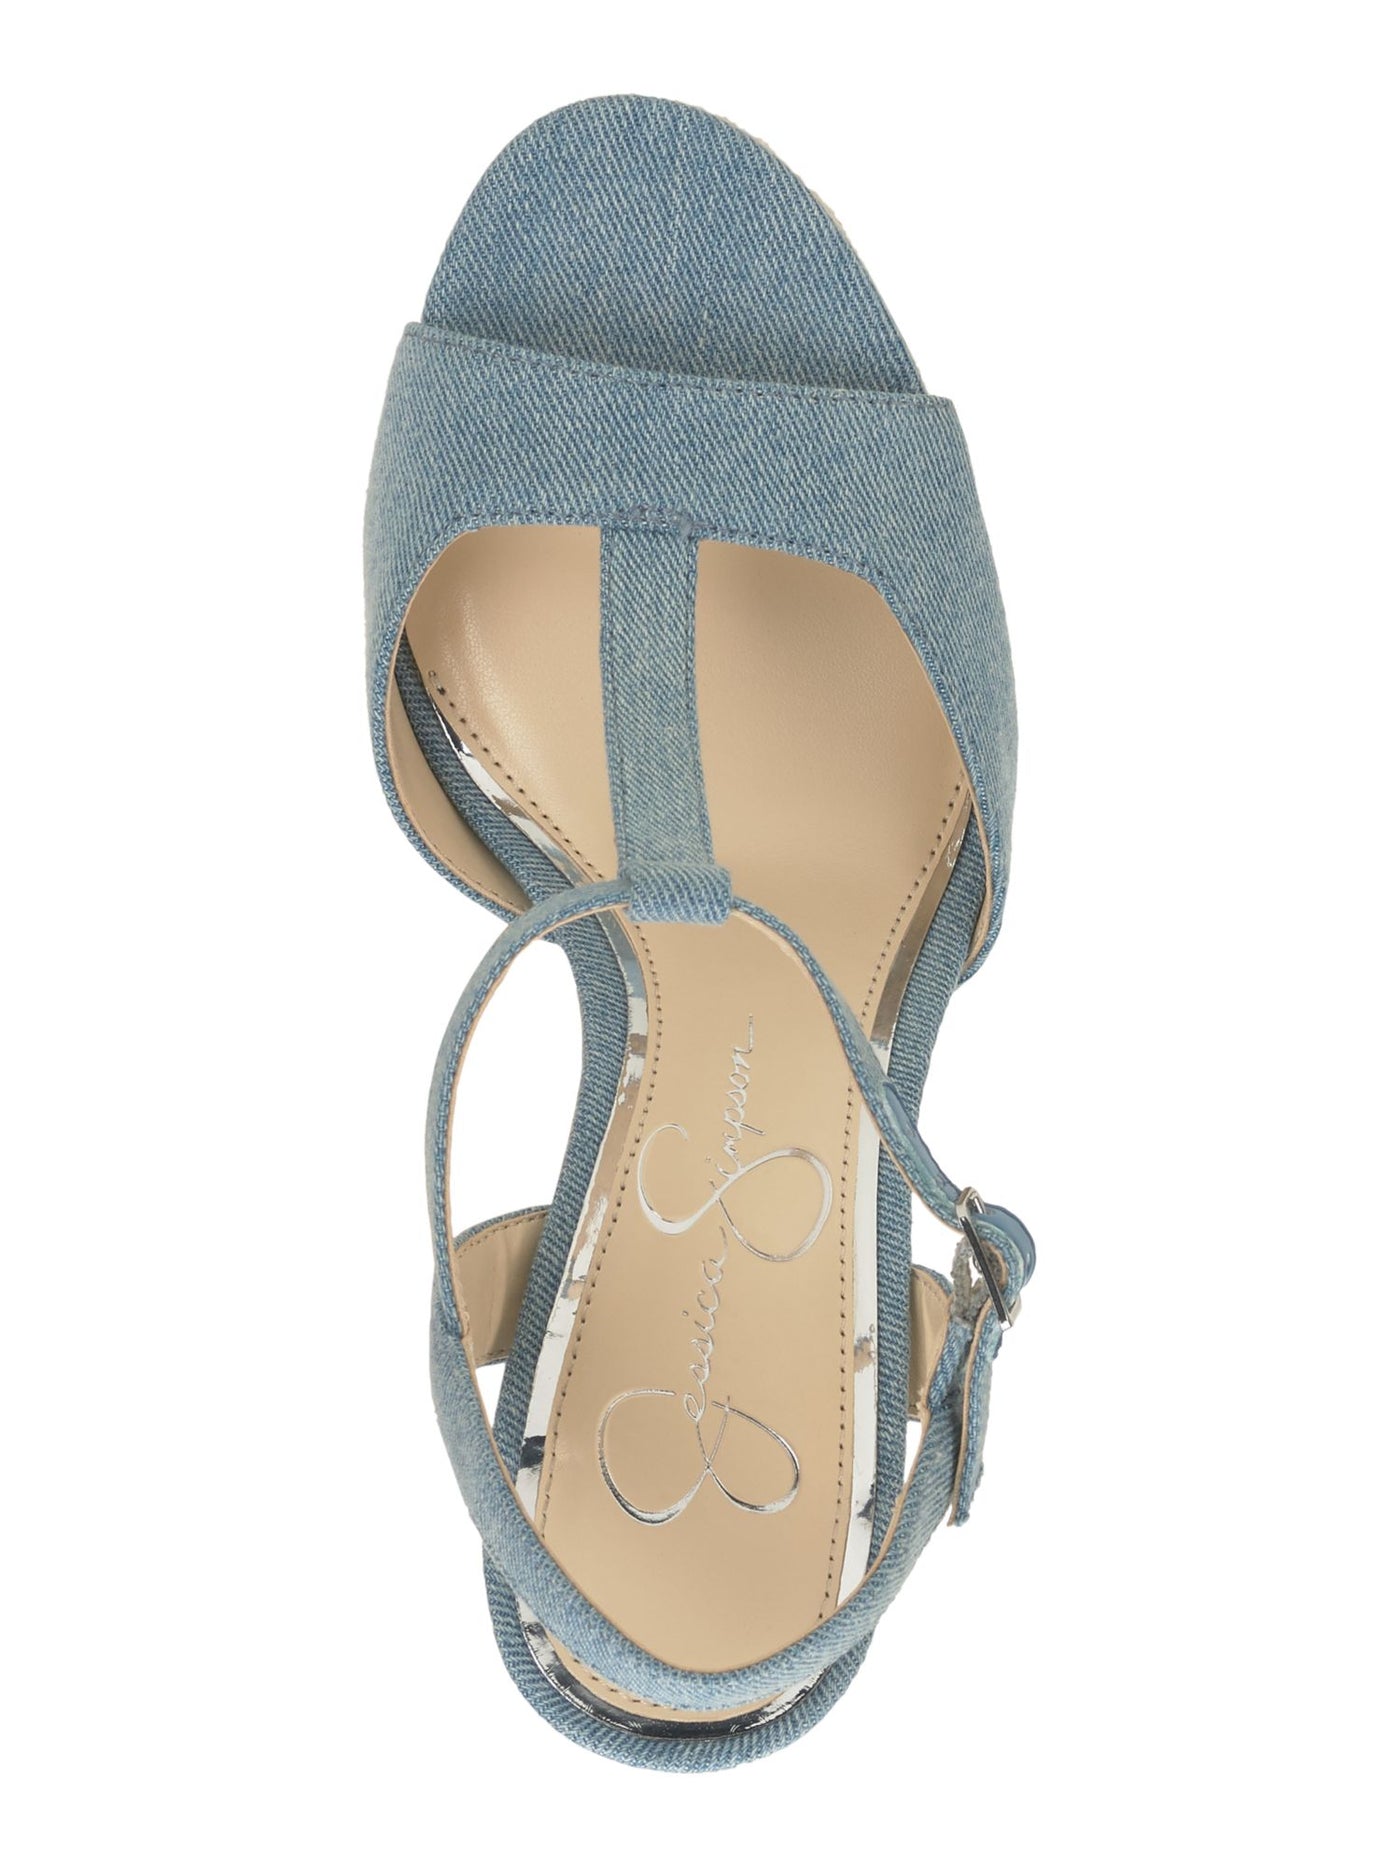 JESSICA SIMPSON Womens Blue 1-1/2" Platform T-Strap Padded Ameeka Round Toe Block Heel Buckle Espadrille Shoes 11 M